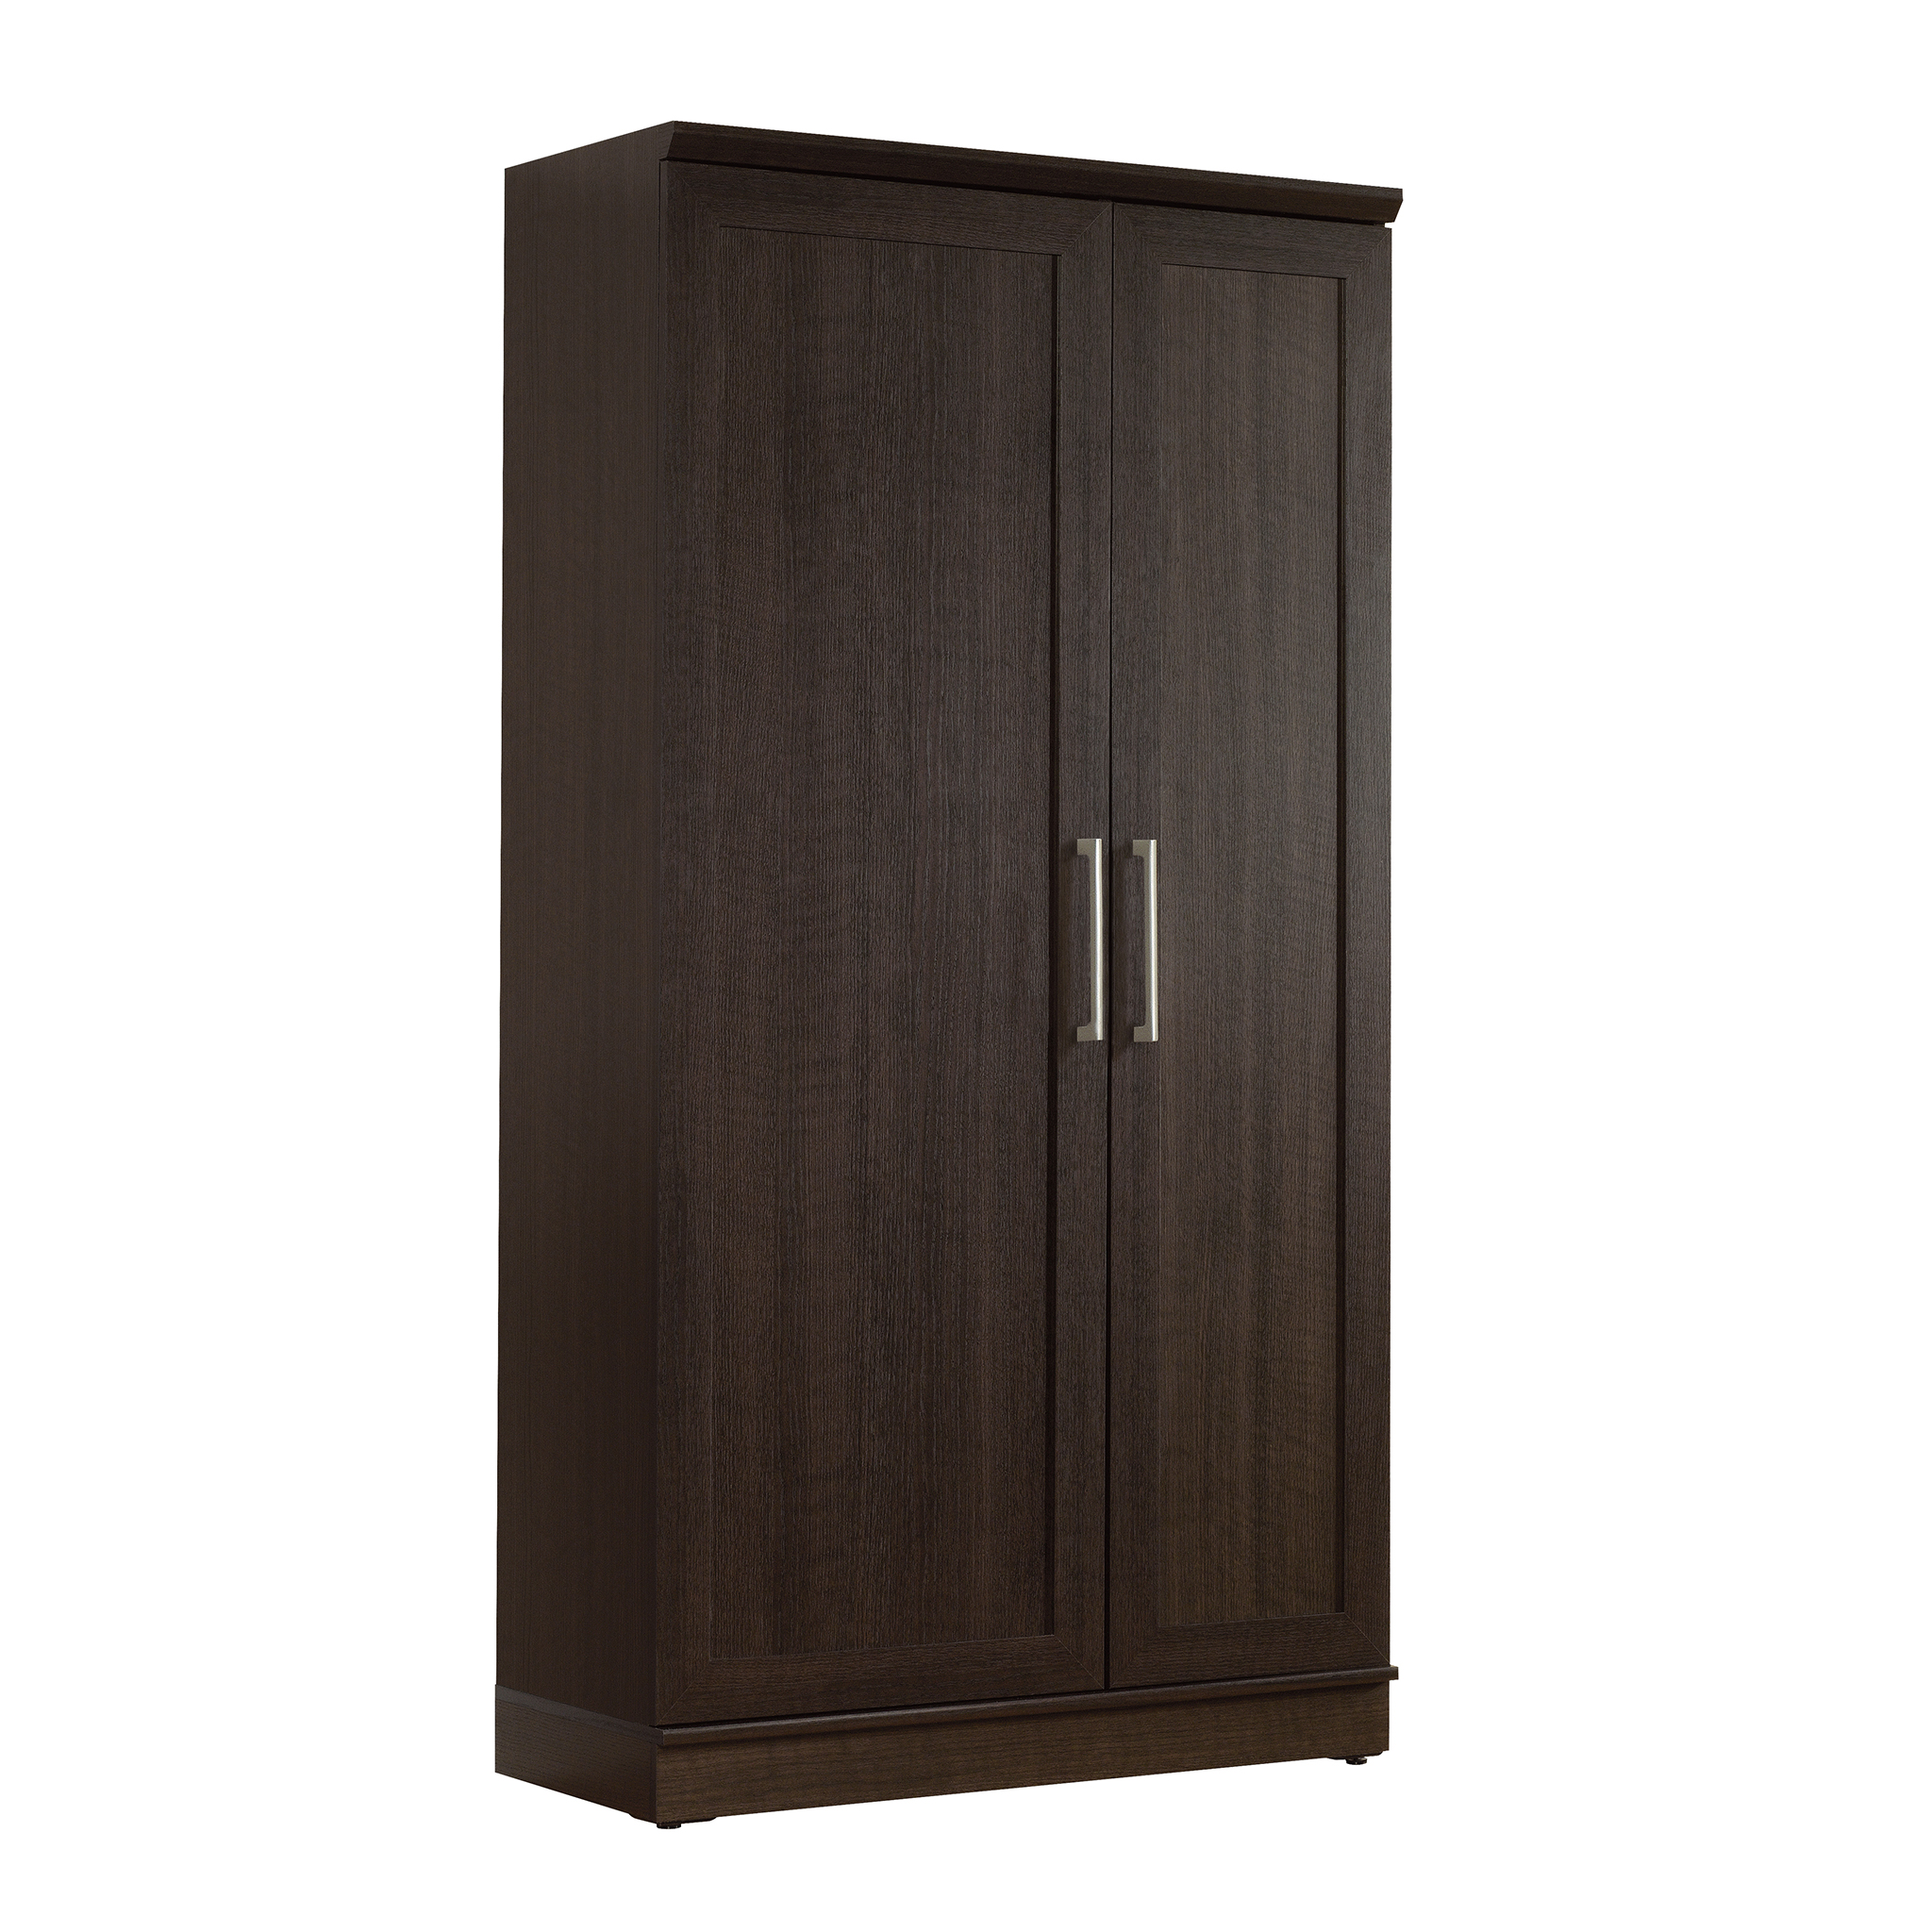 Sauder HomePlus Storage Cabinet, Dakota Oak Finish - image 1 of 12